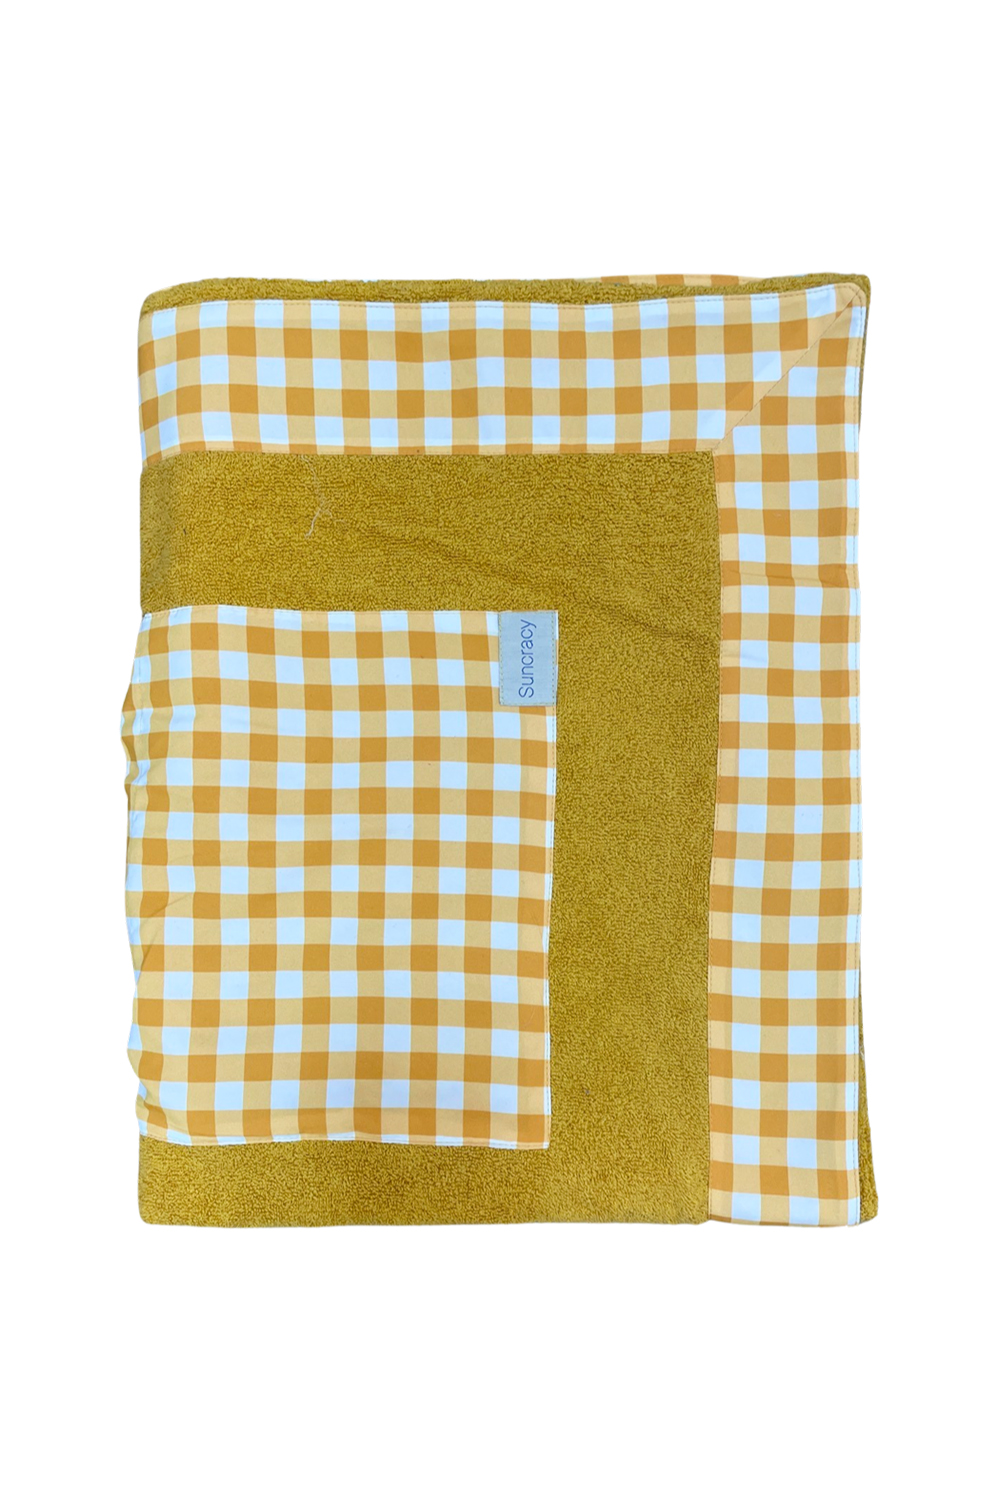 Marbella Yellow Plaids Towel